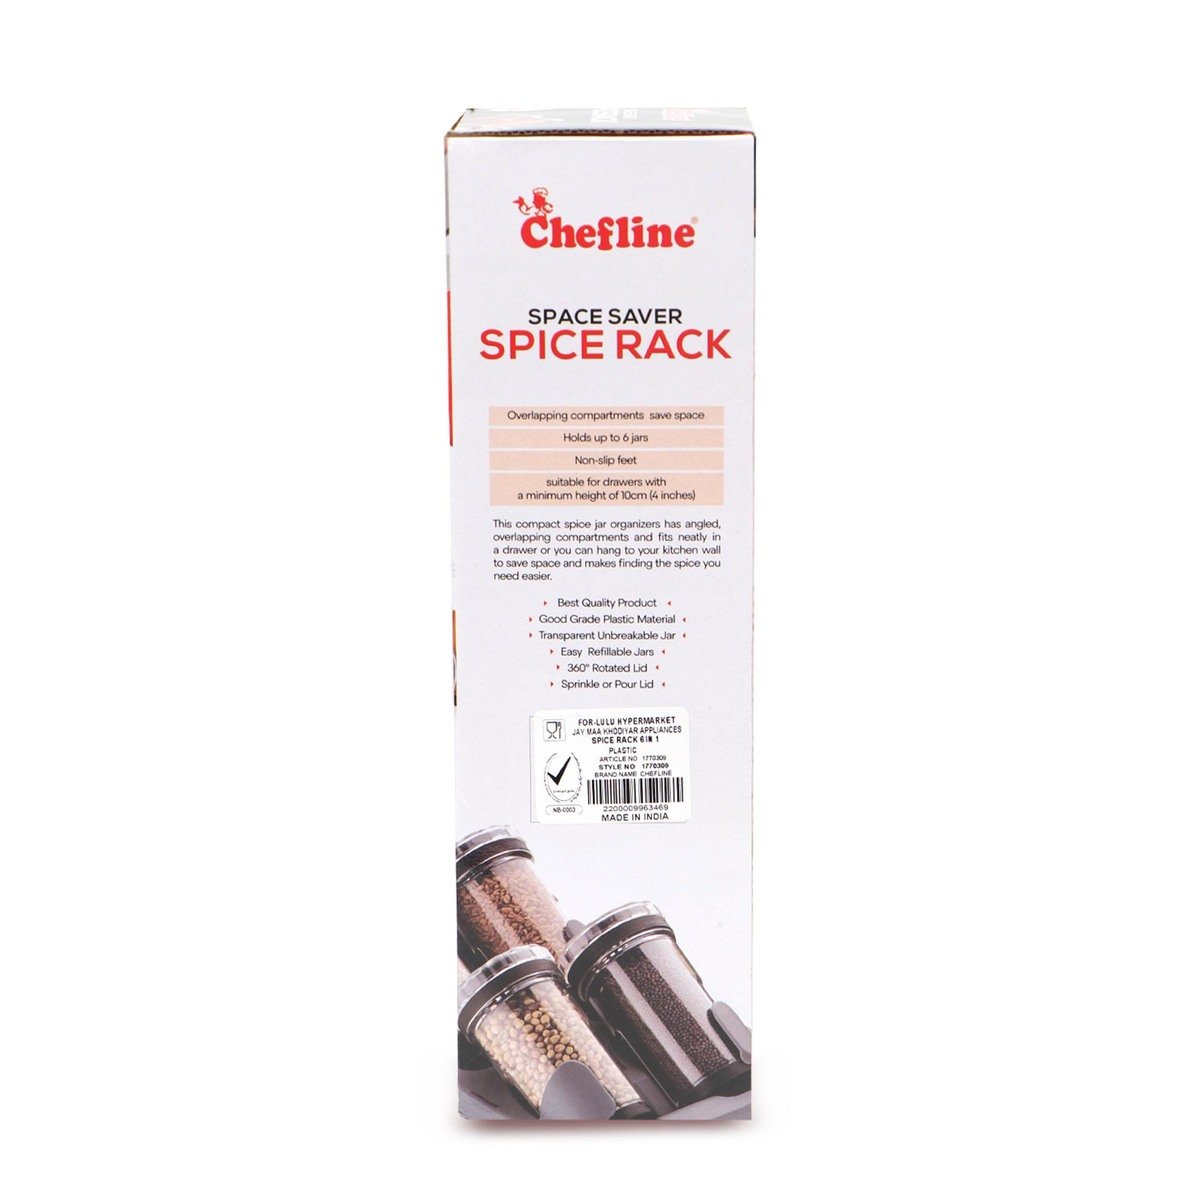 Chefline Spice Rack 6in1 IND